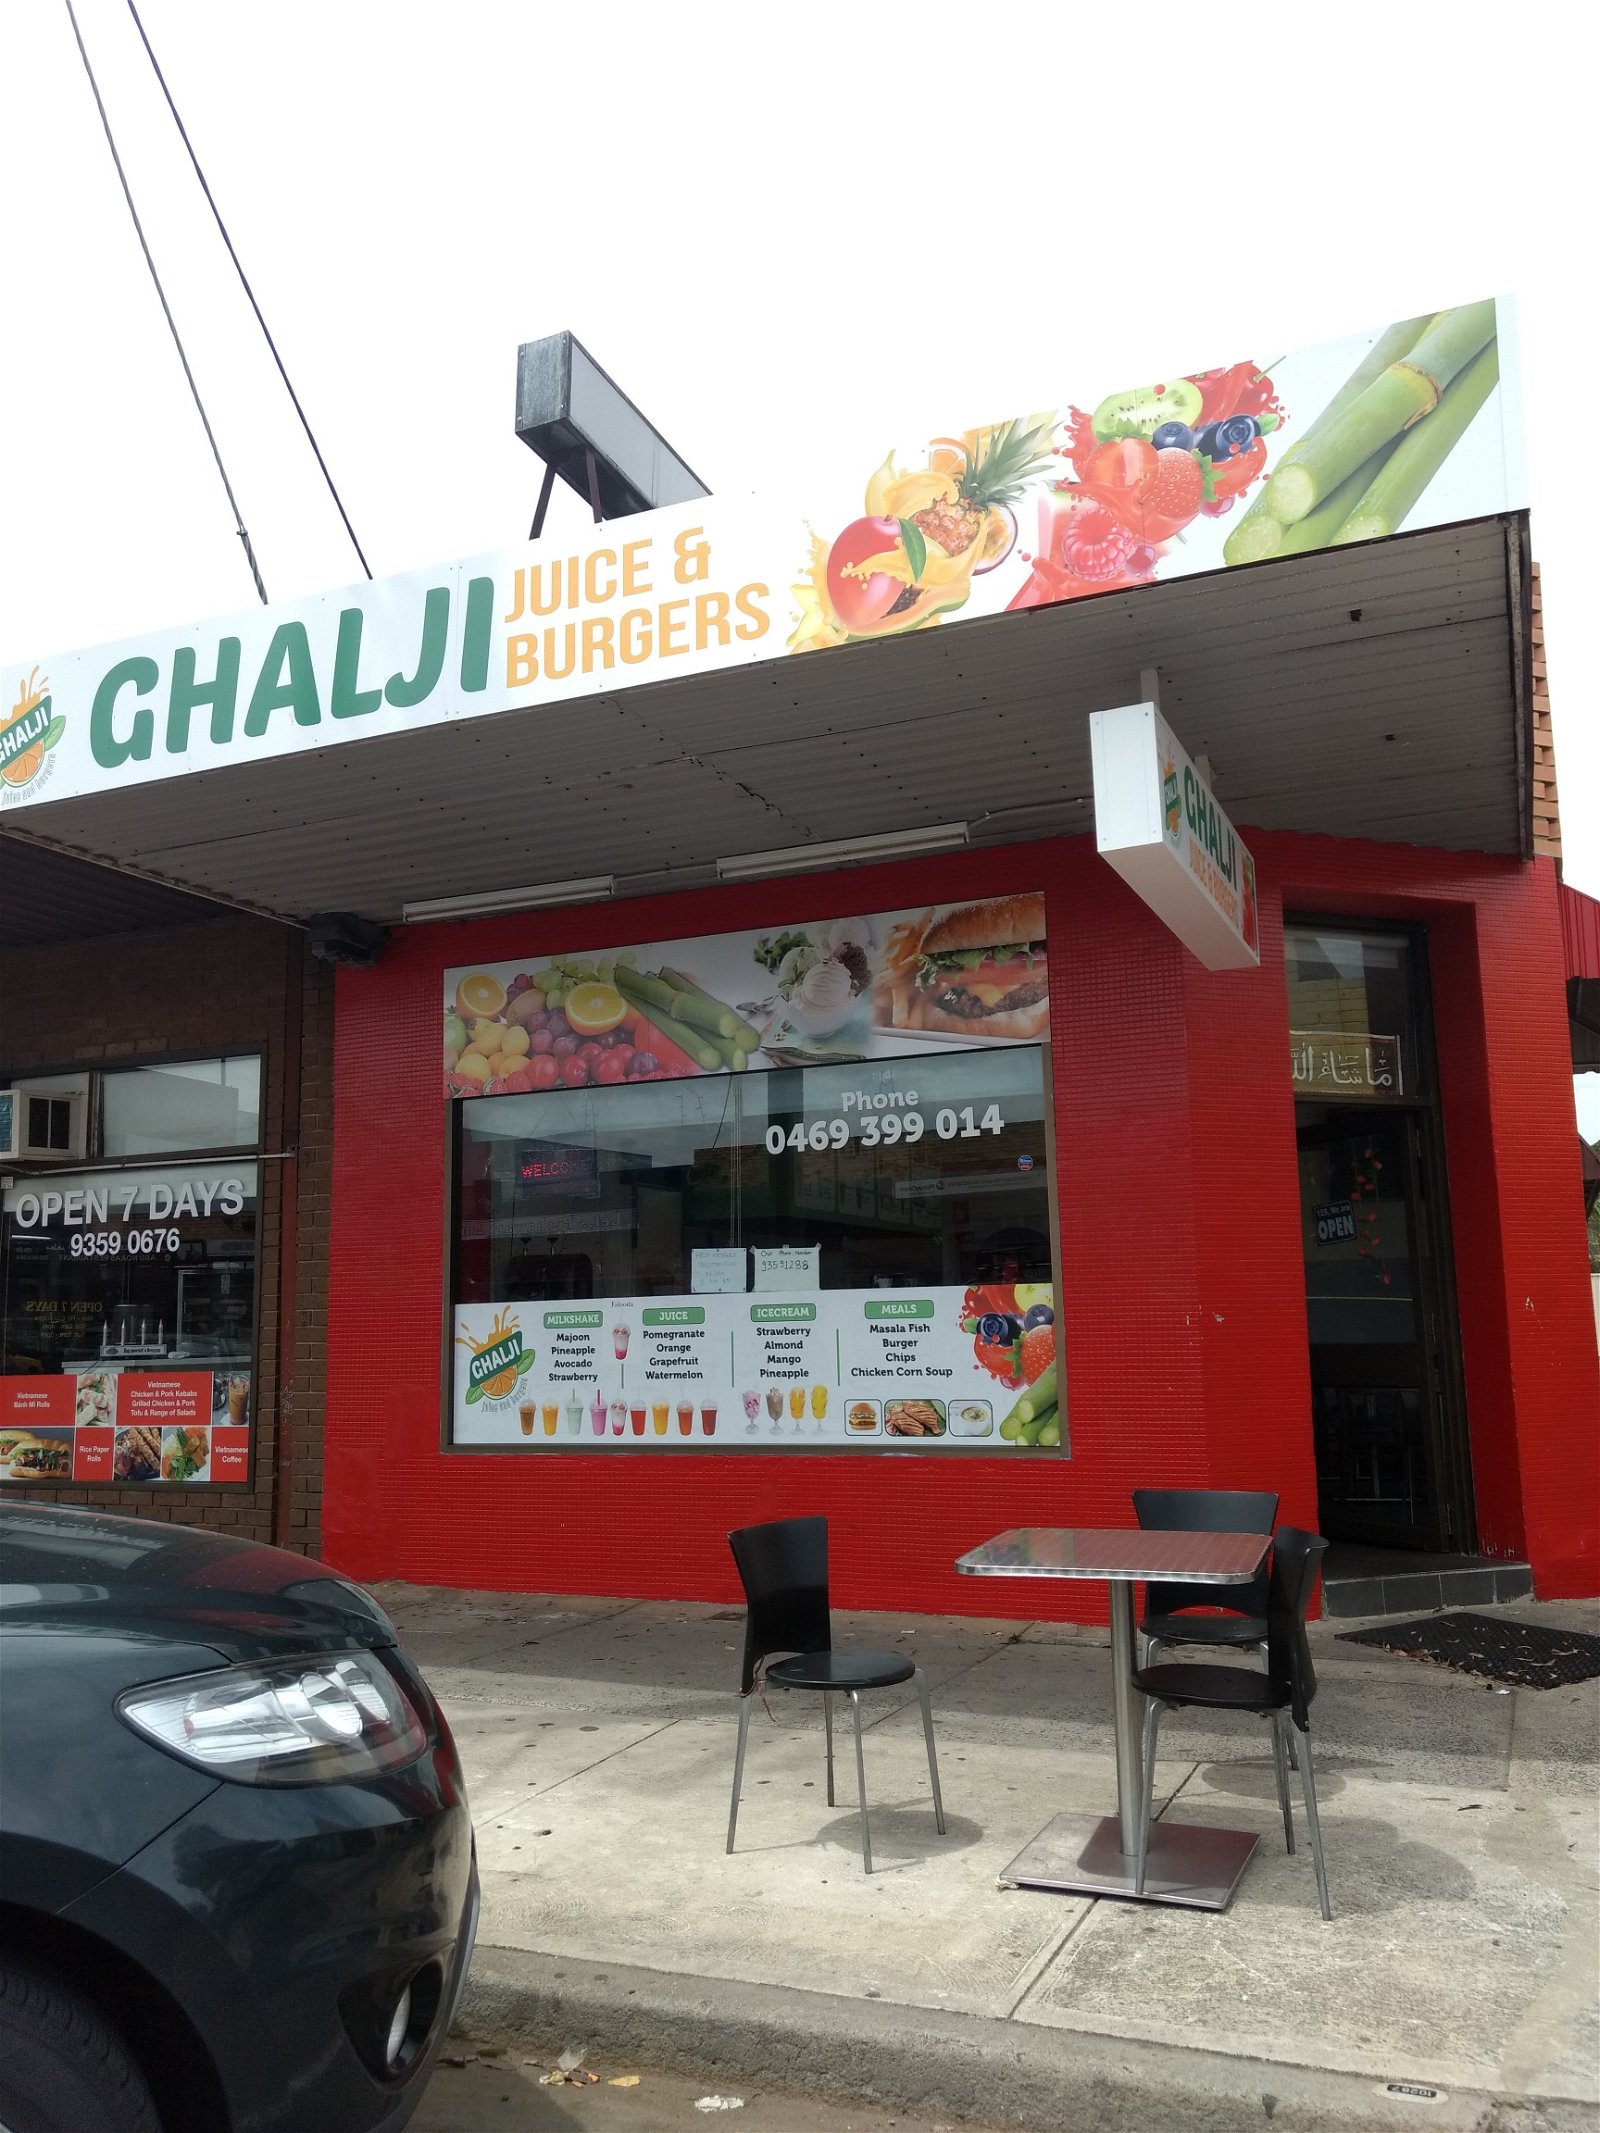 Ghalji Juice  Burgers - Australia Accommodation